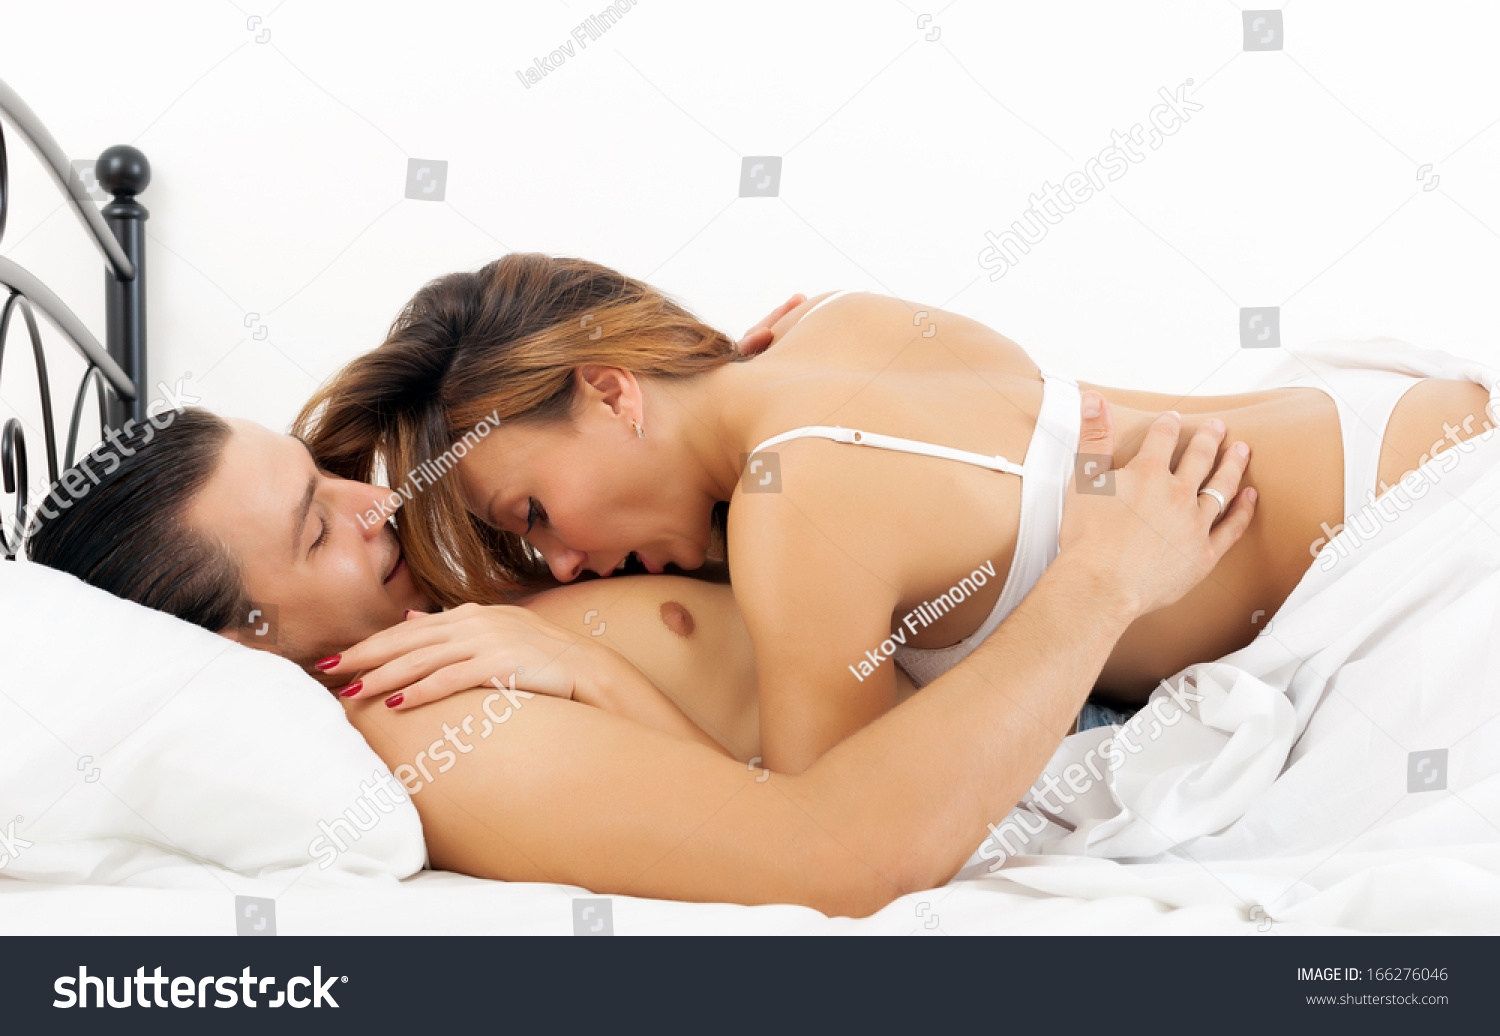 Couple Having Sex